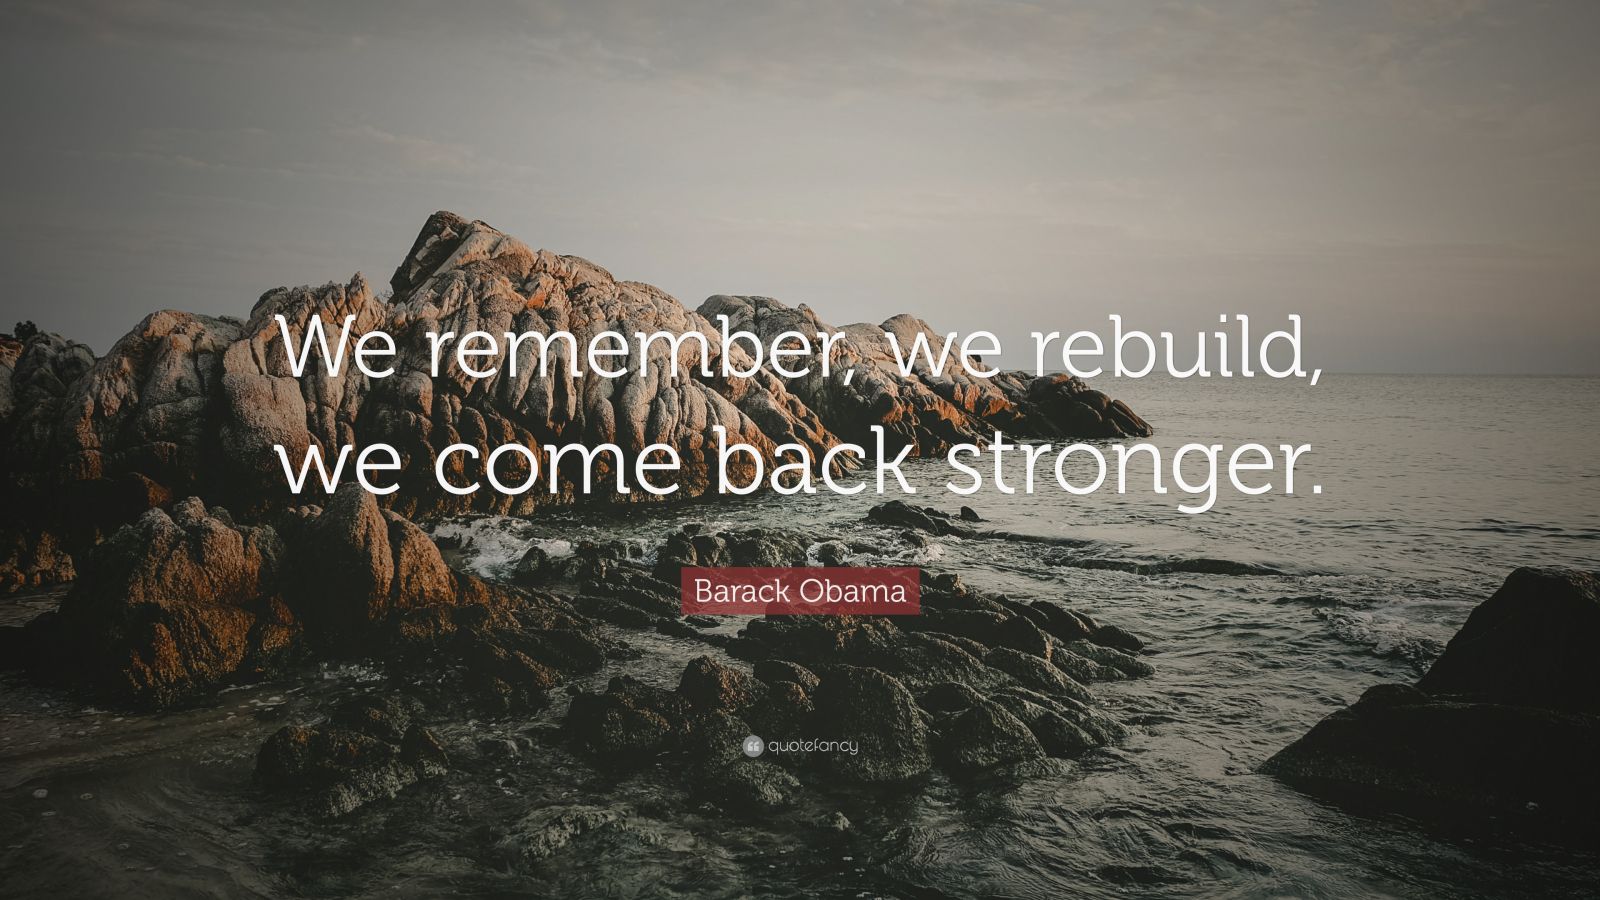 Quotes stronger back come comeback setback comebacks strong make than